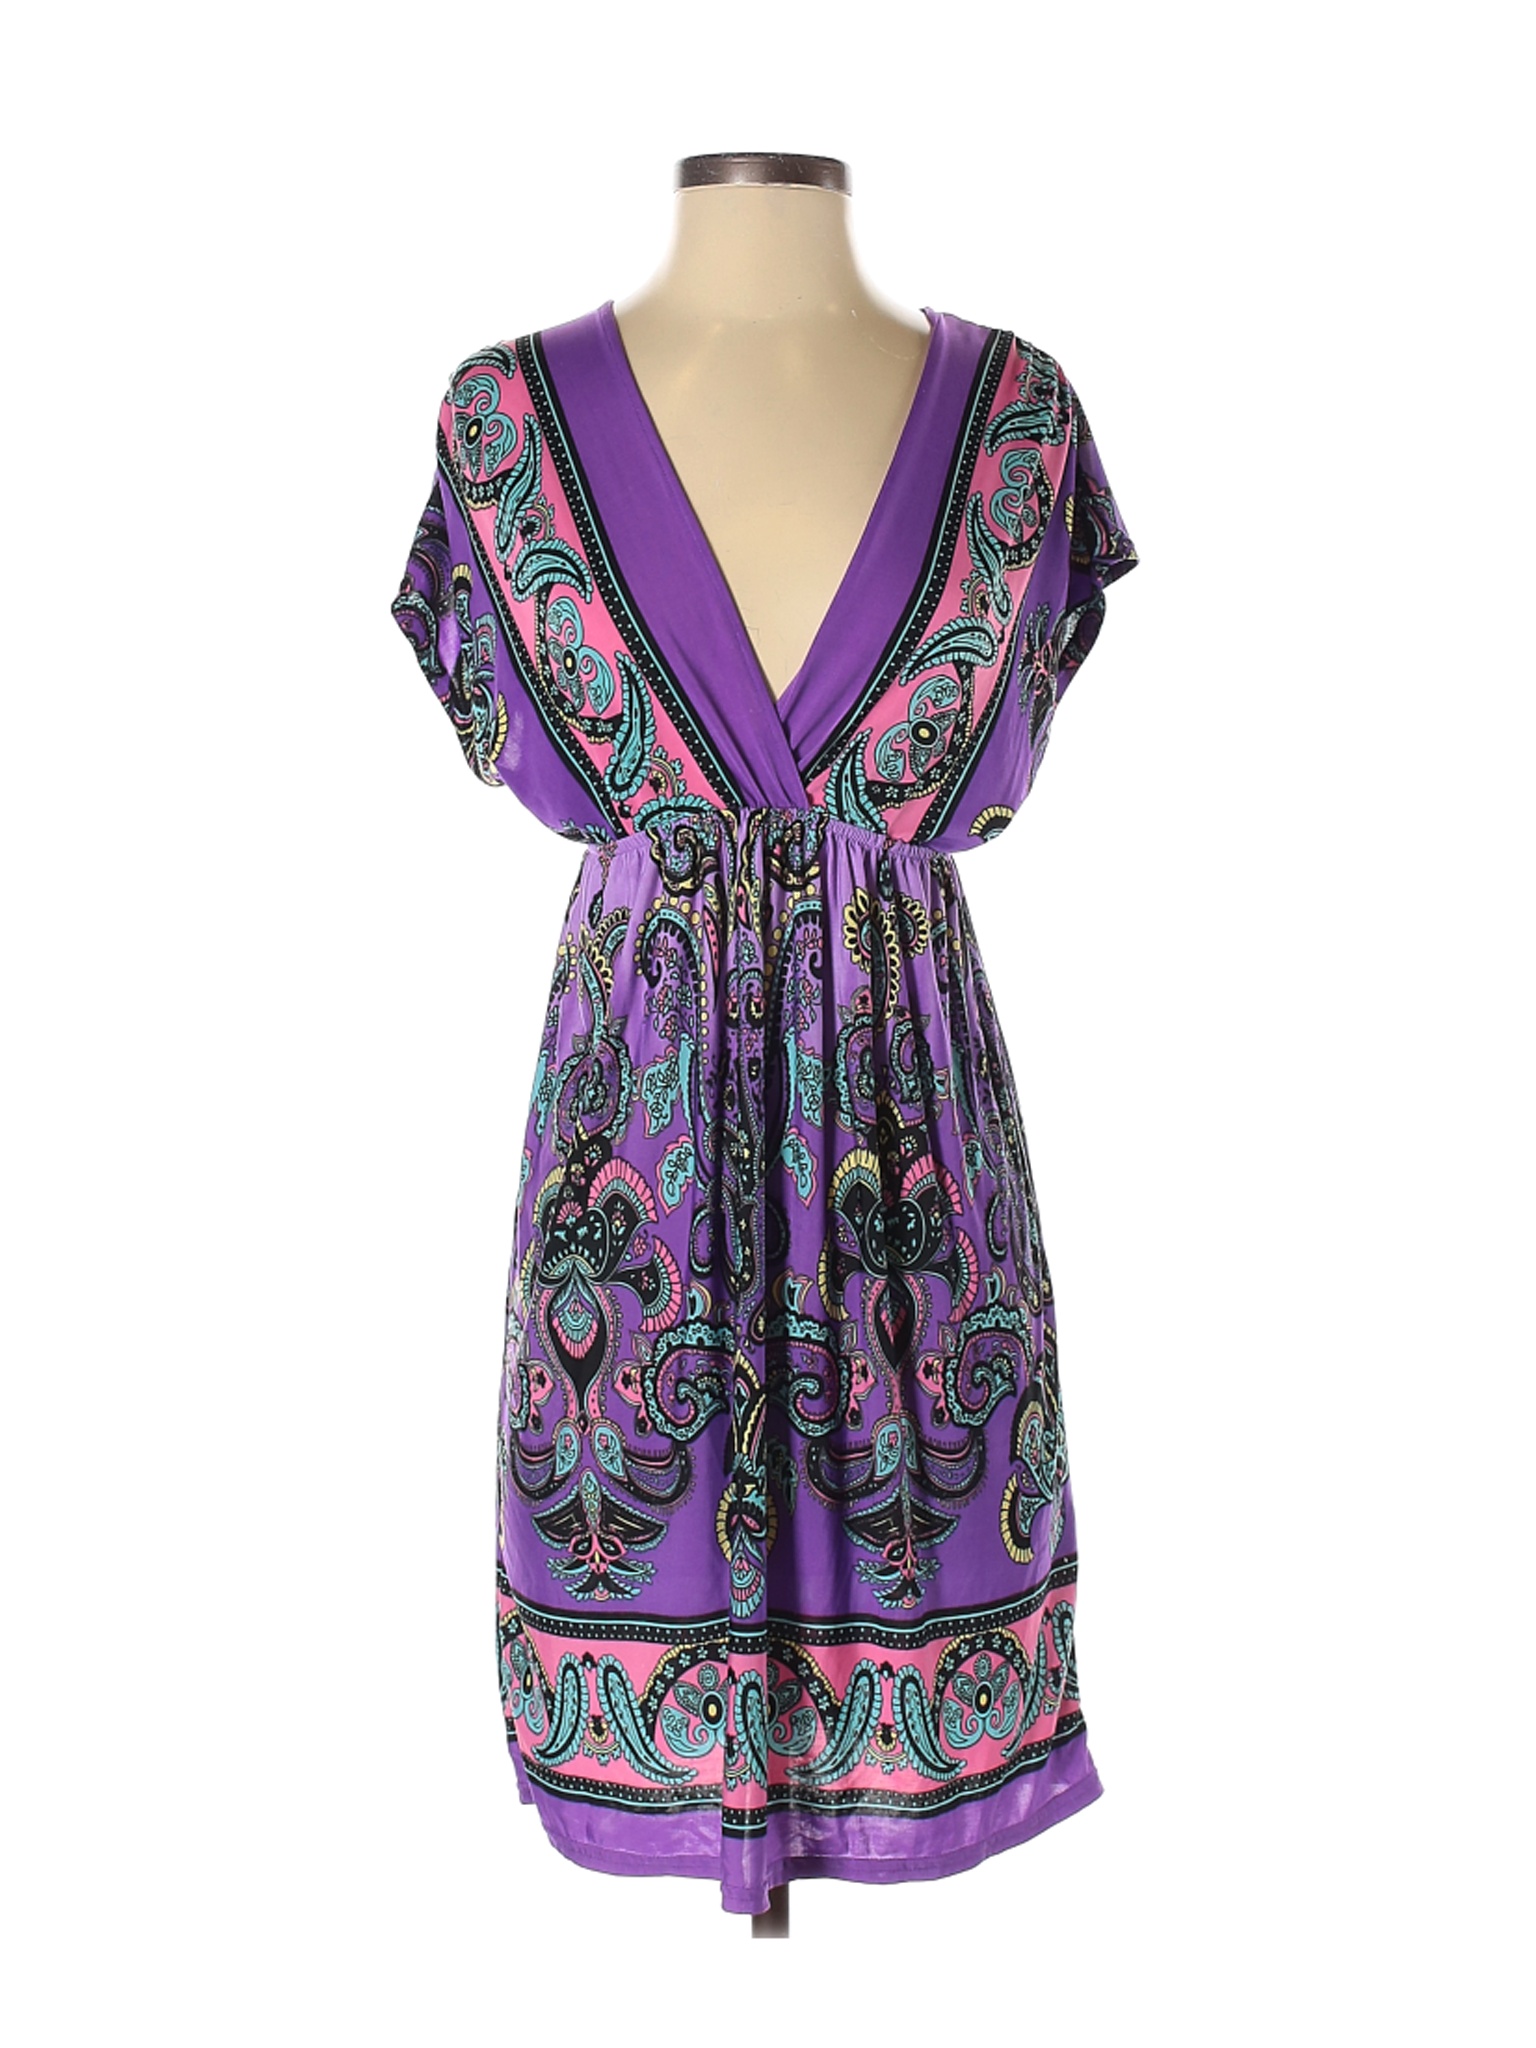 Cristinalove Women Purple Casual Dress S | eBay